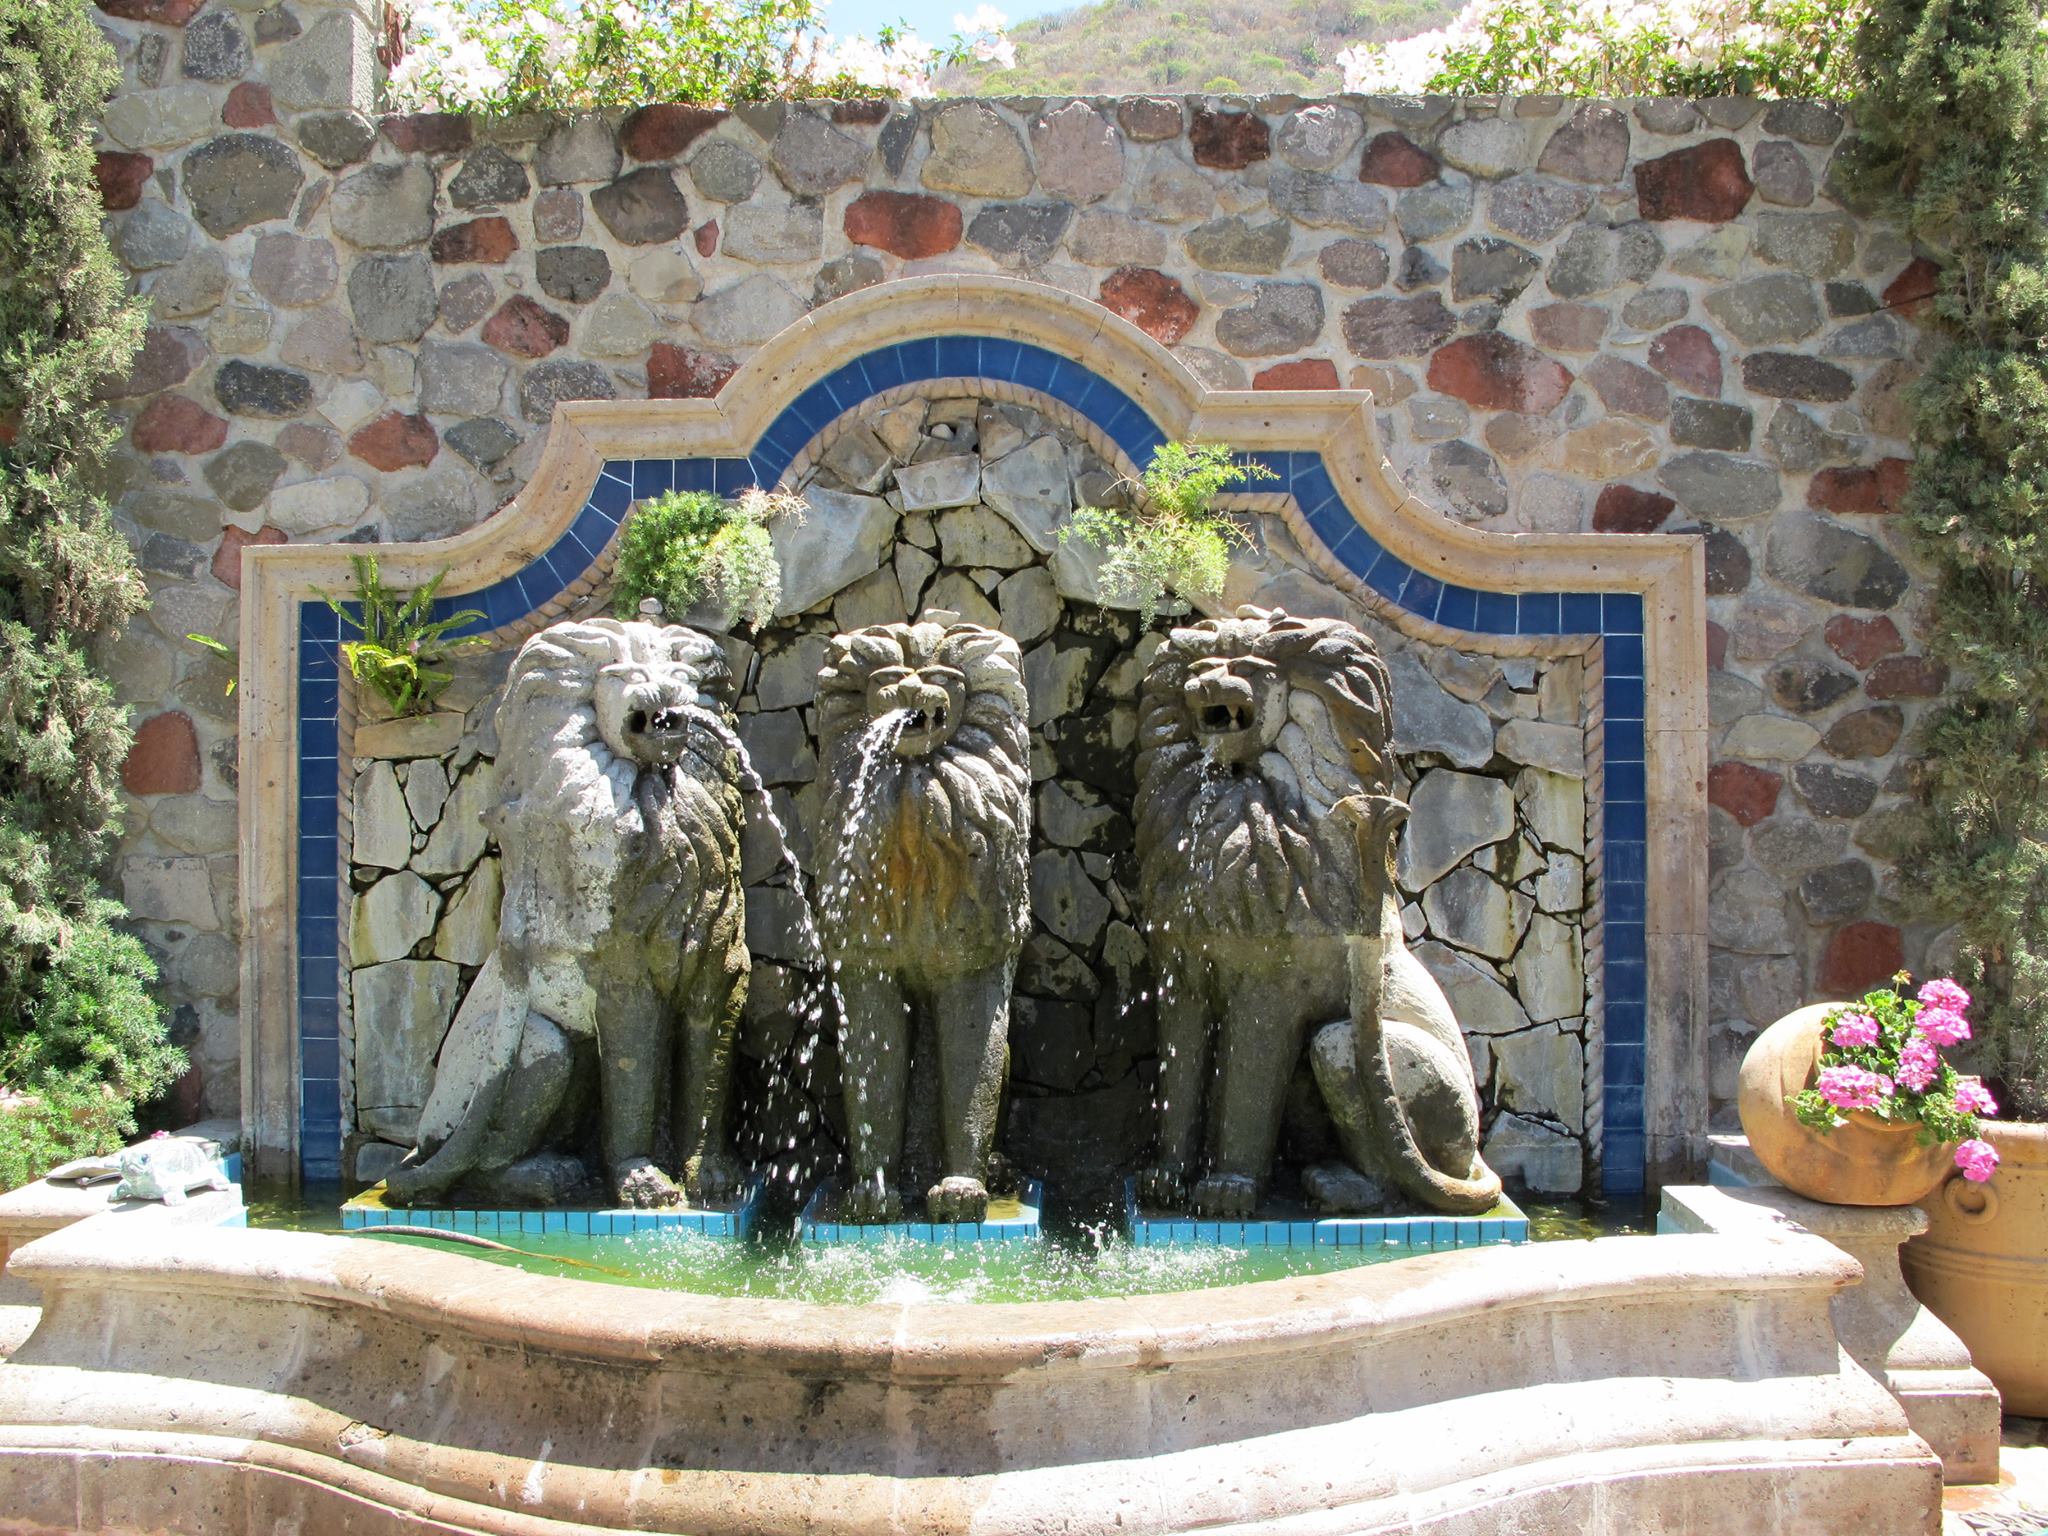 The fountain at Casa Tres Leones in Ajijic, Mexico